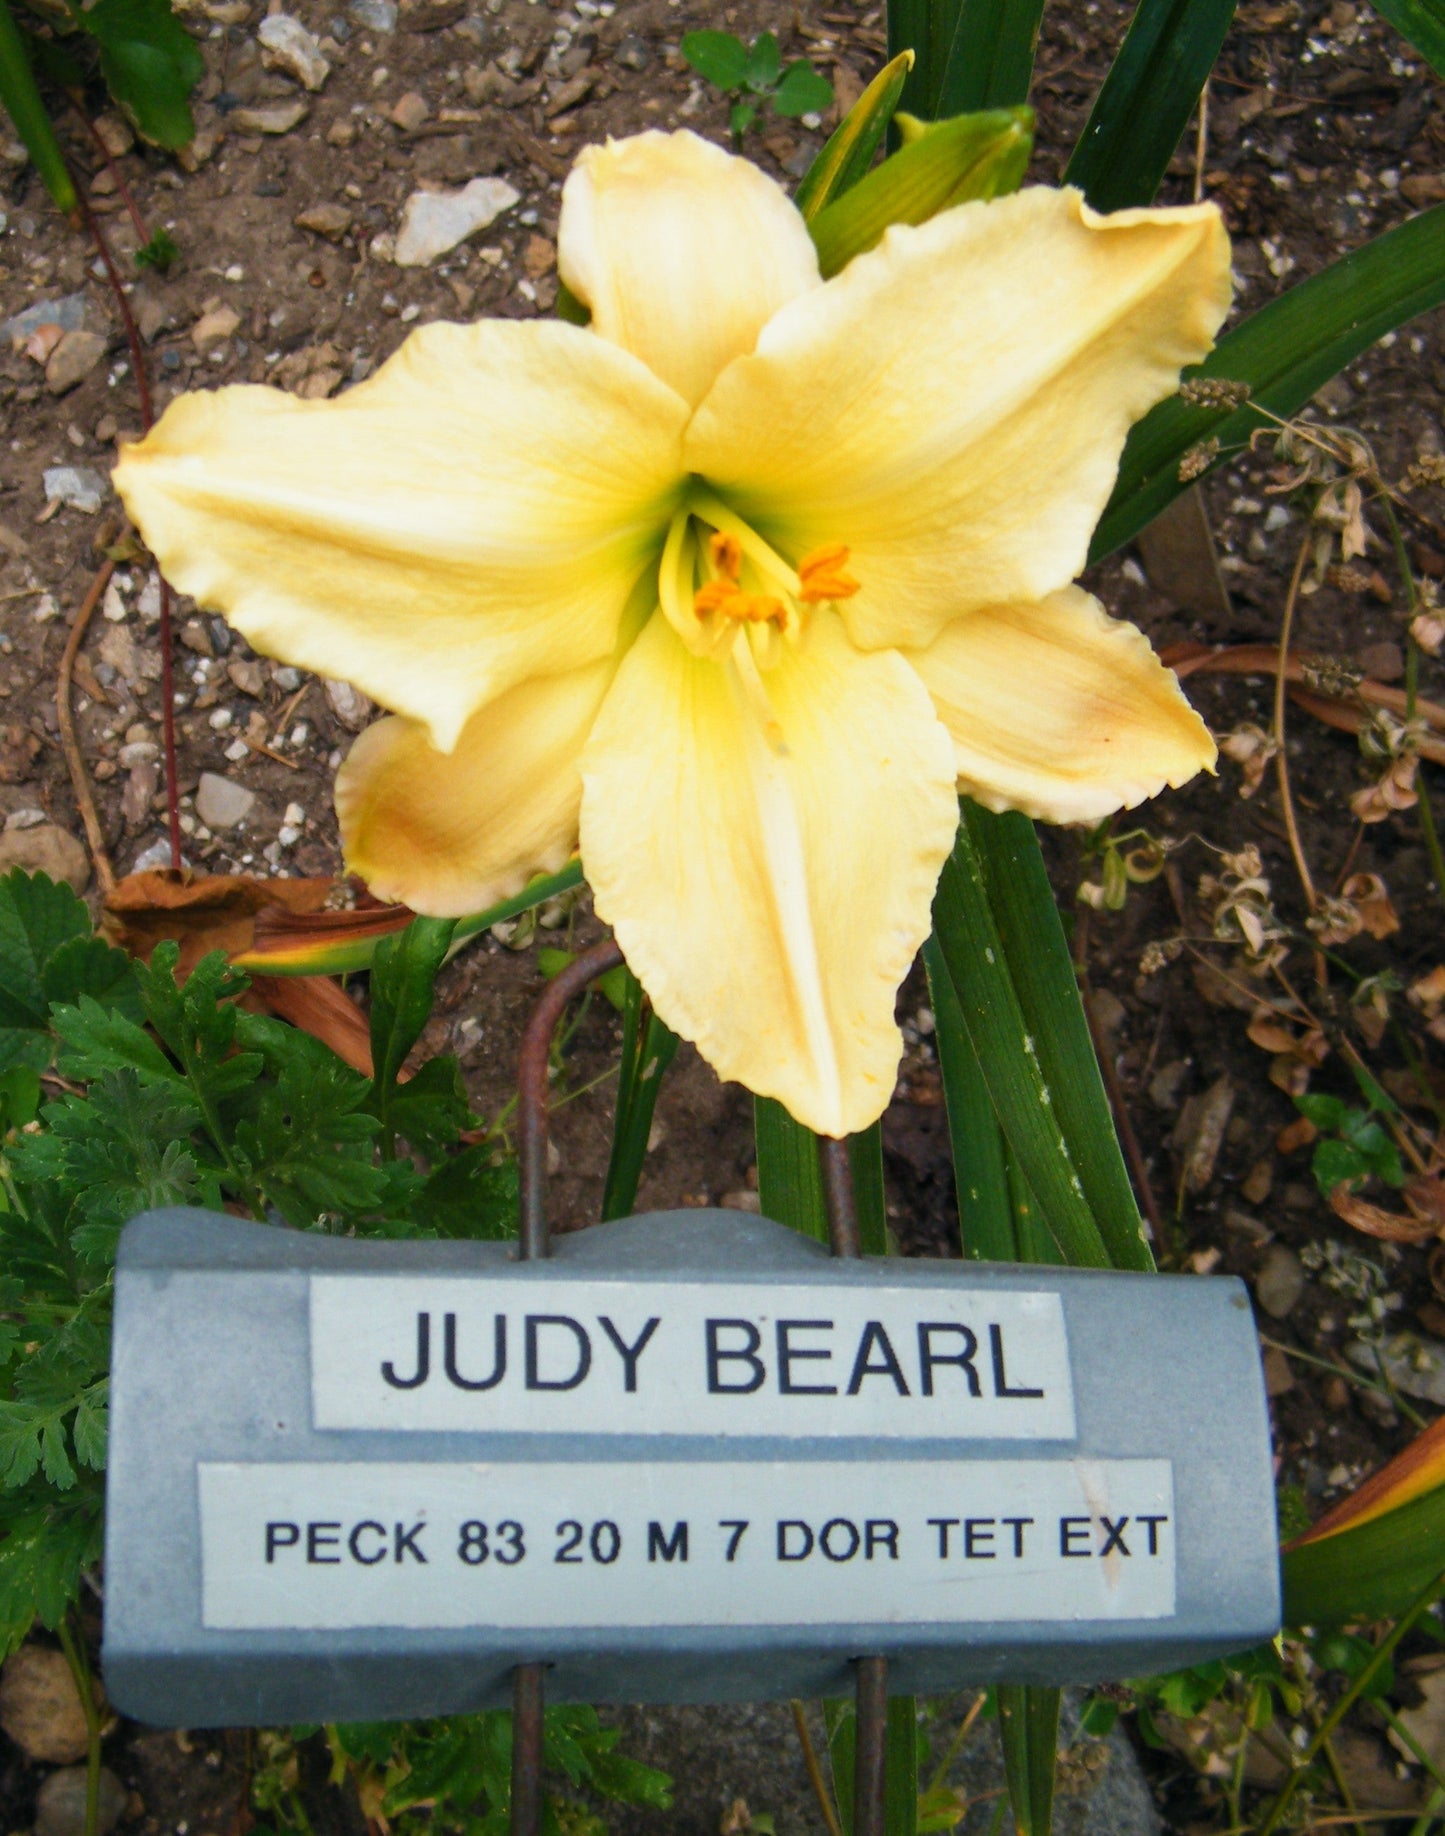 JUDY BEARL